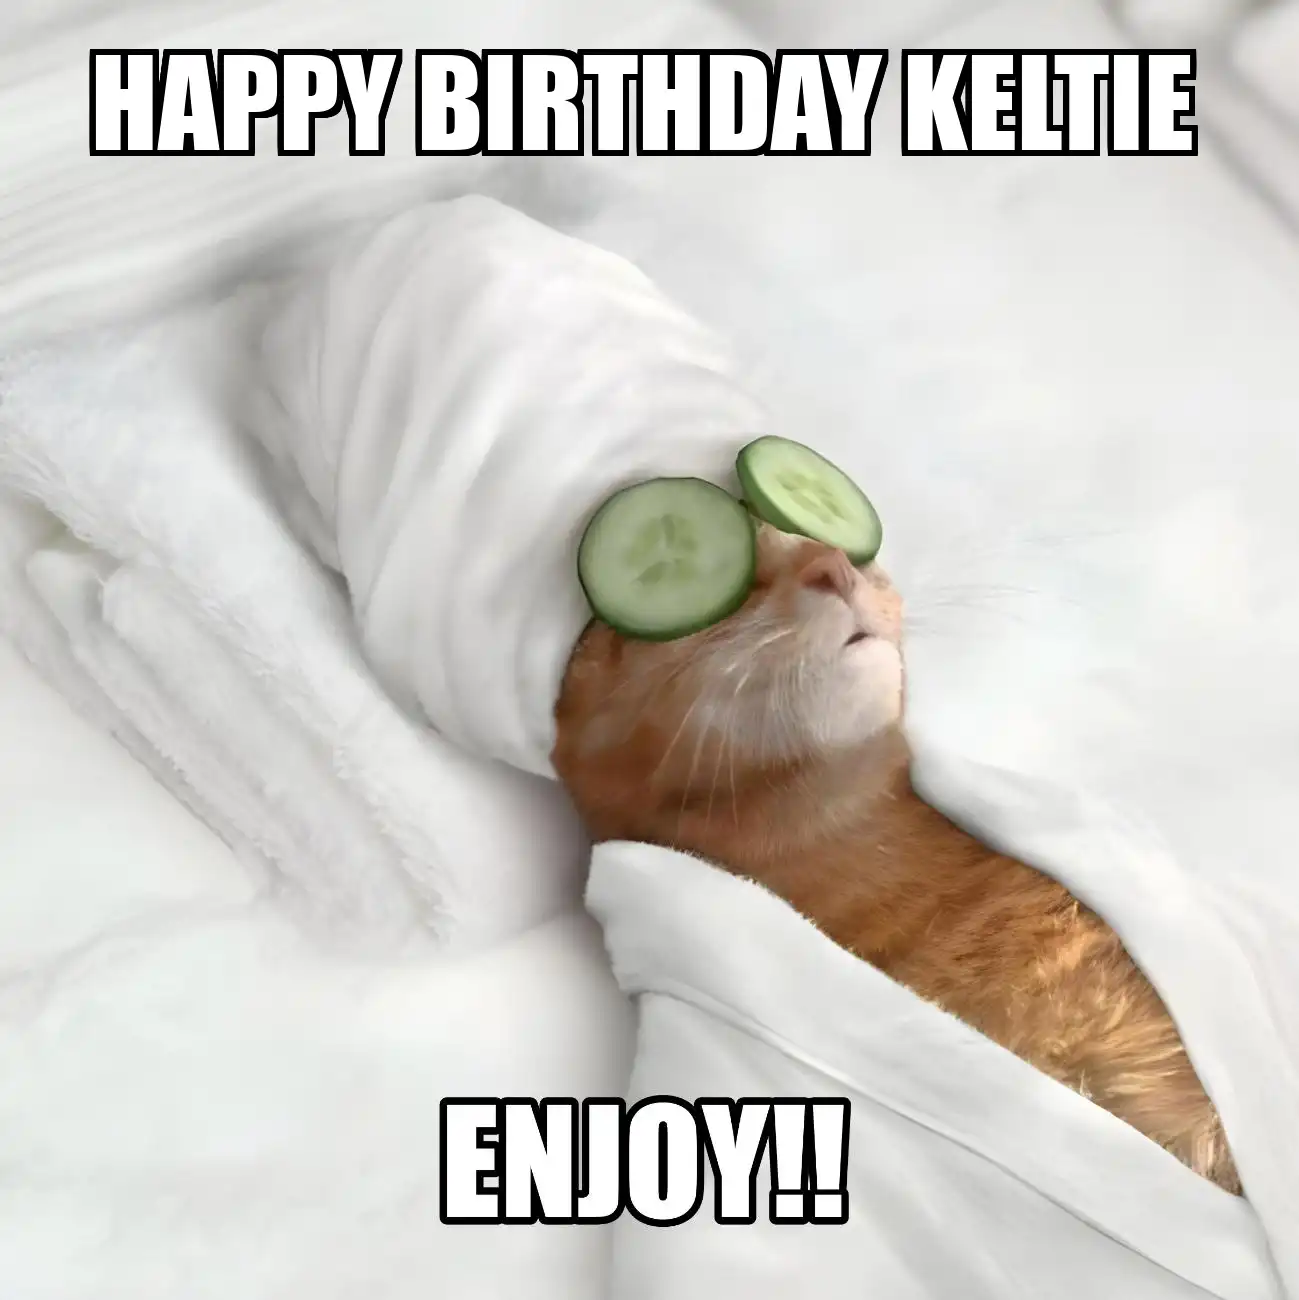 Happy Birthday Keltie Enjoy Cat Meme